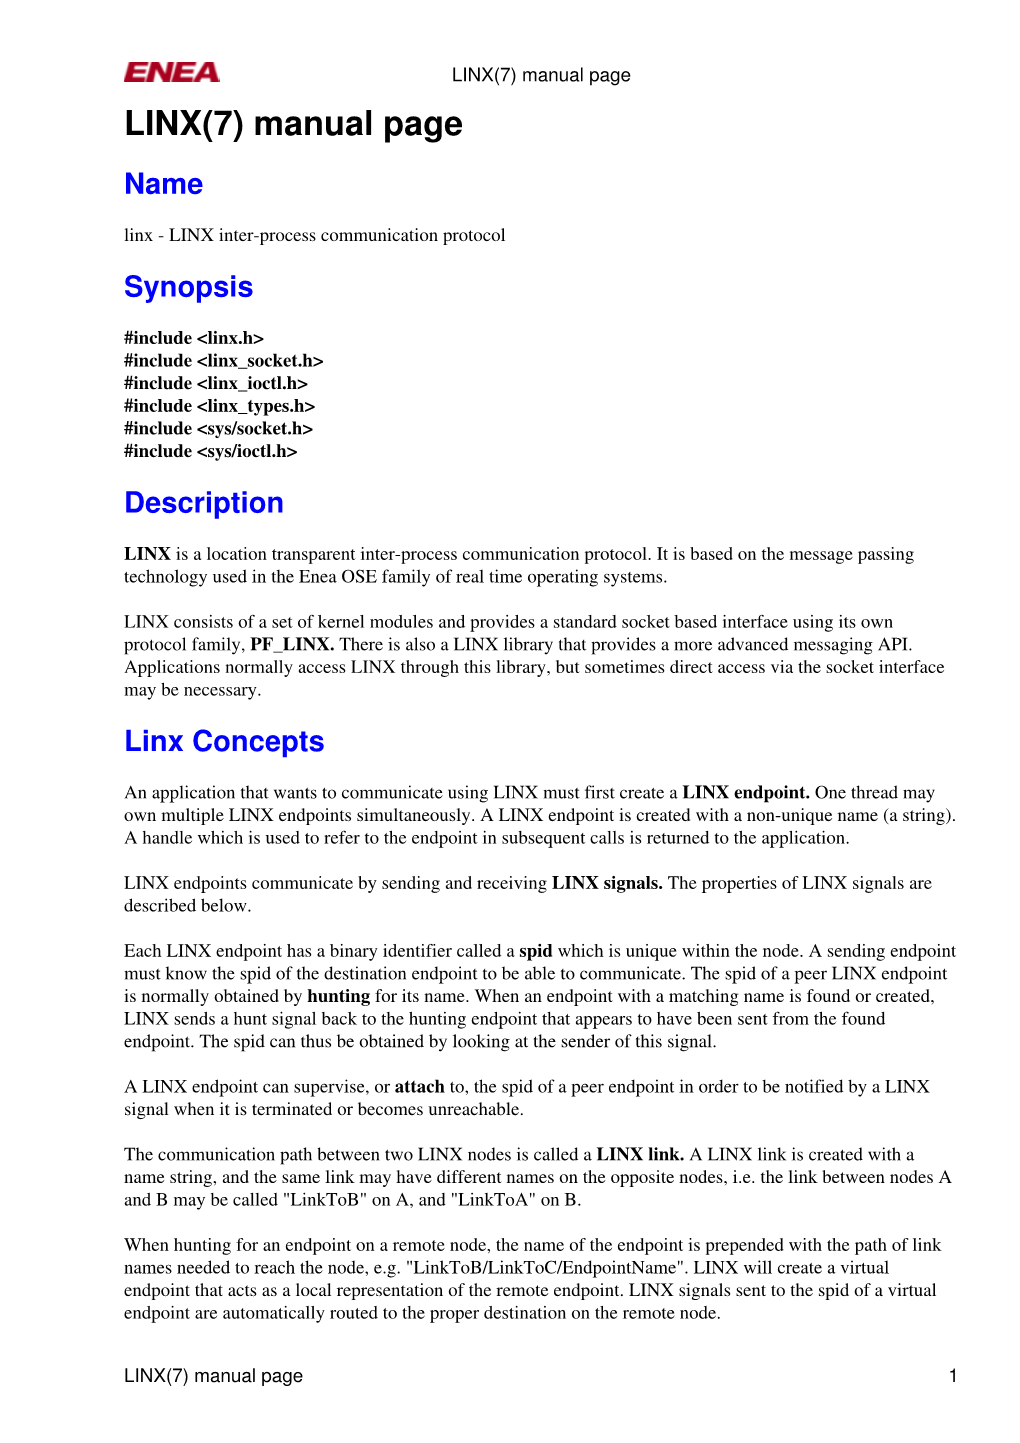 LINX(7) Manual Page LINX(7) Manual Page Name Linx - LINX Inter-Process Communication Protocol Synopsis